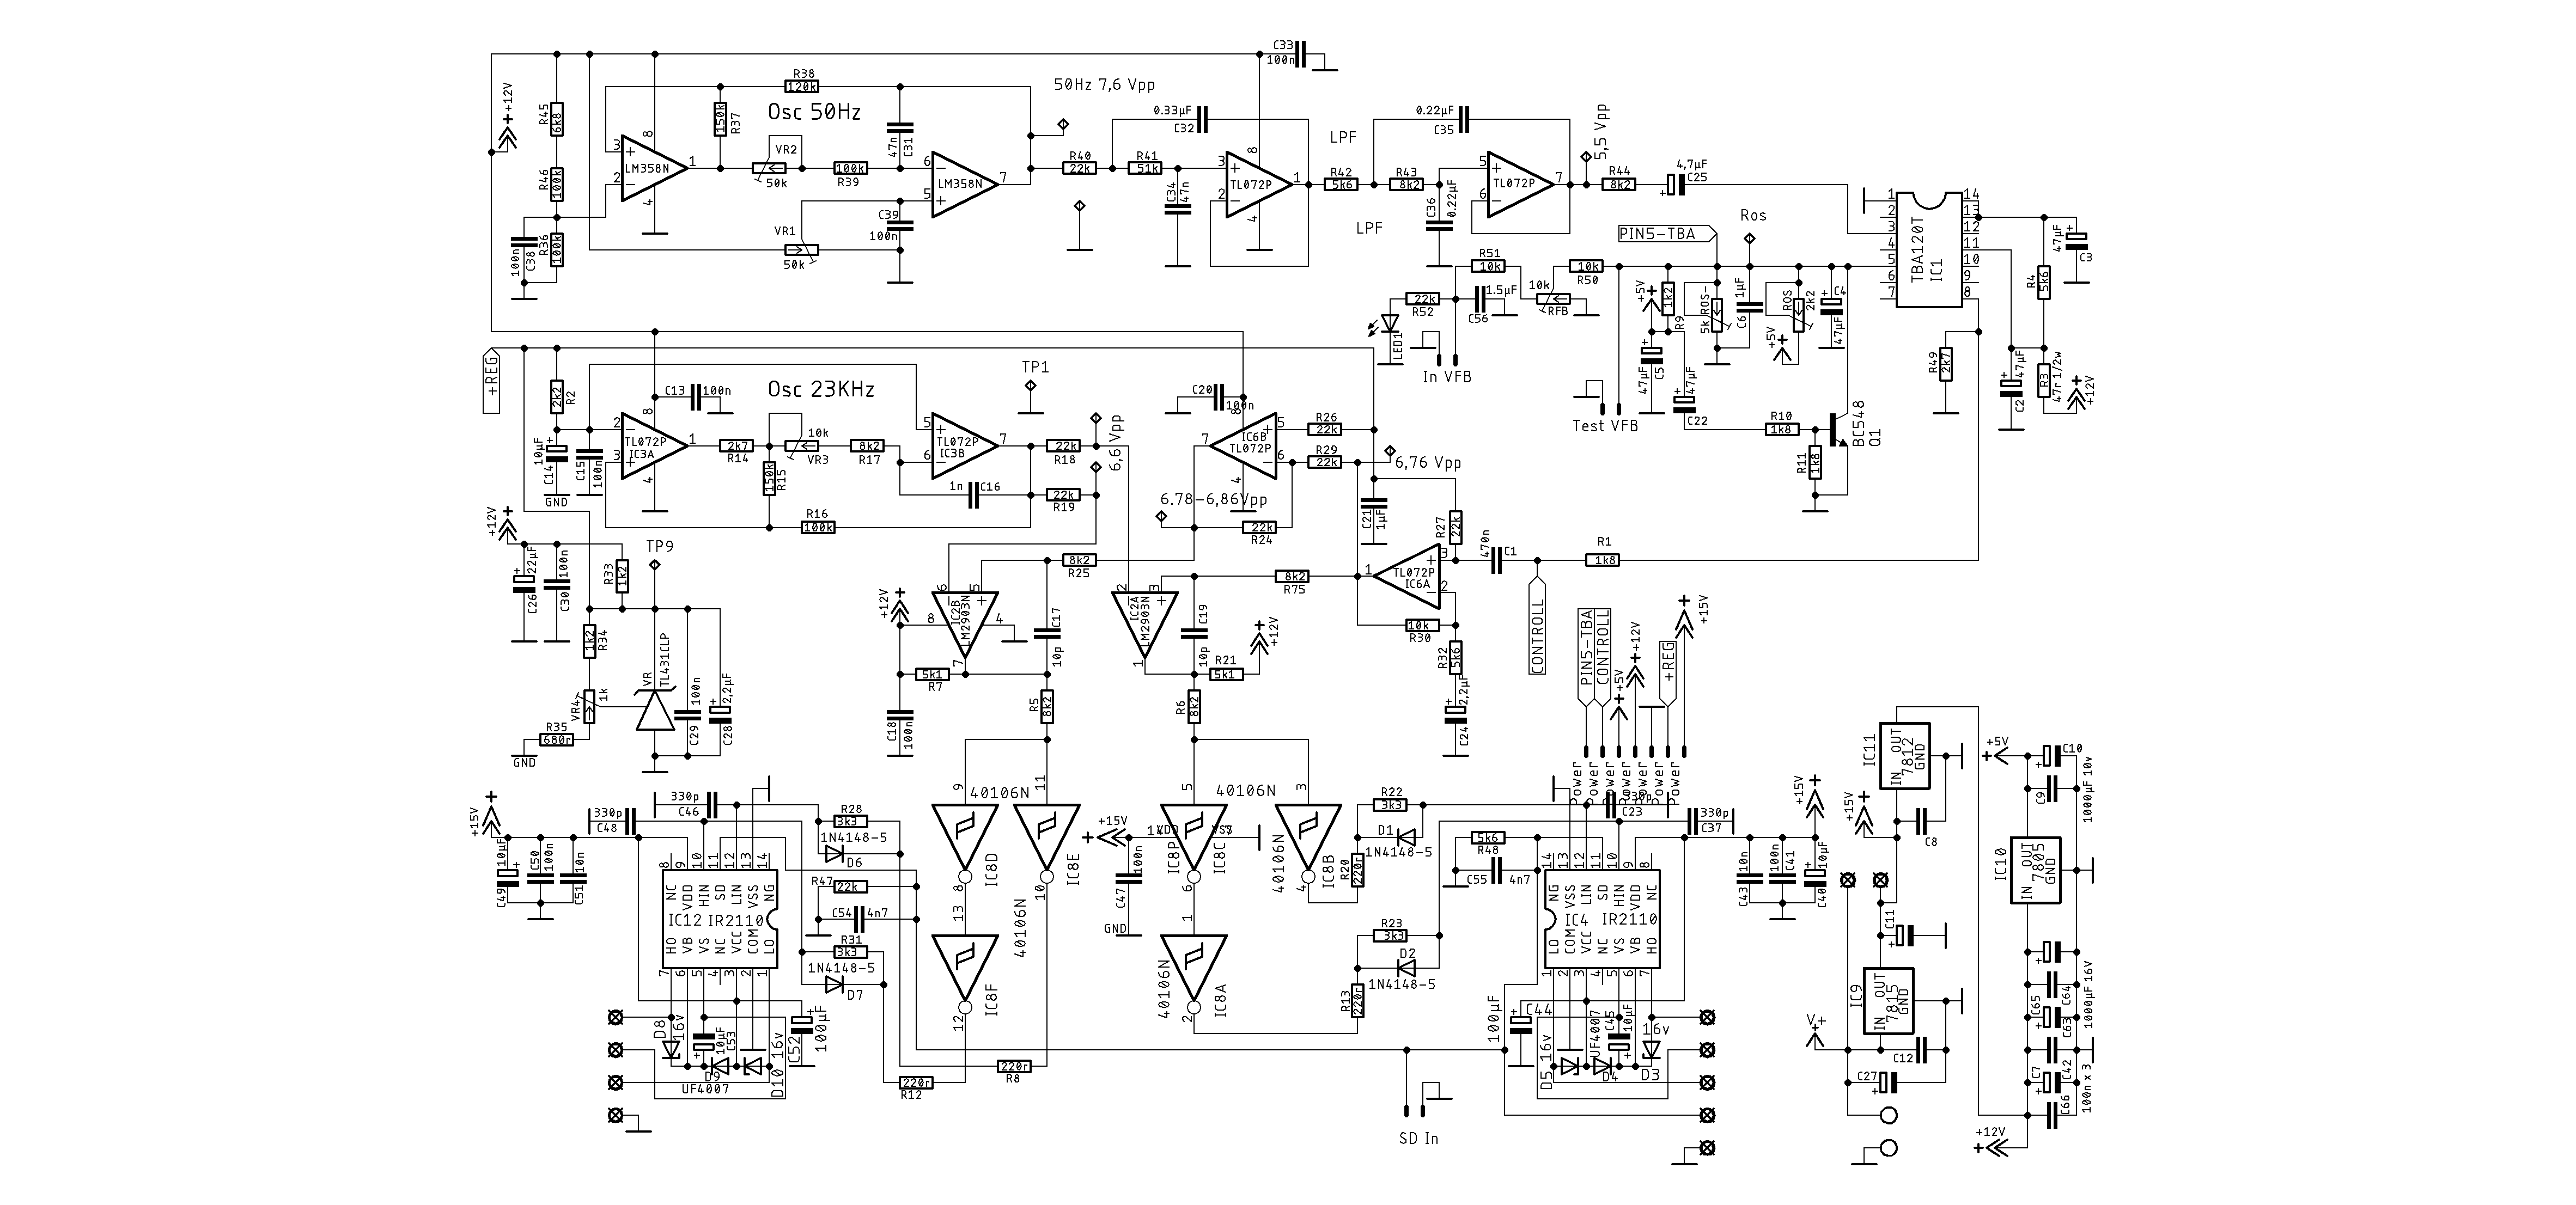 schematic_001.png